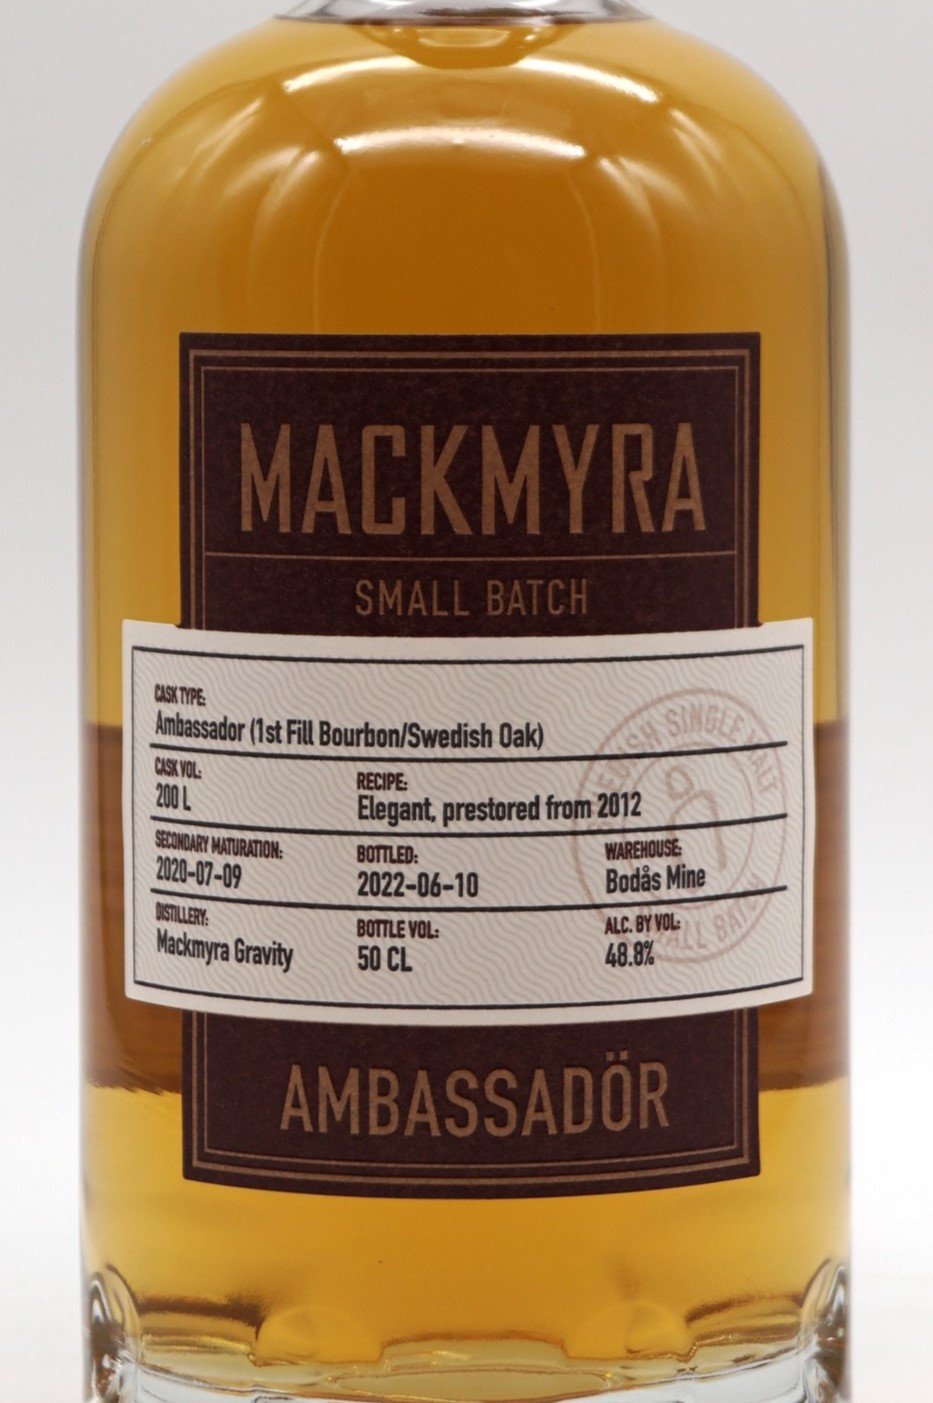 Mackmyra Ambassadör Single Malt Whisky